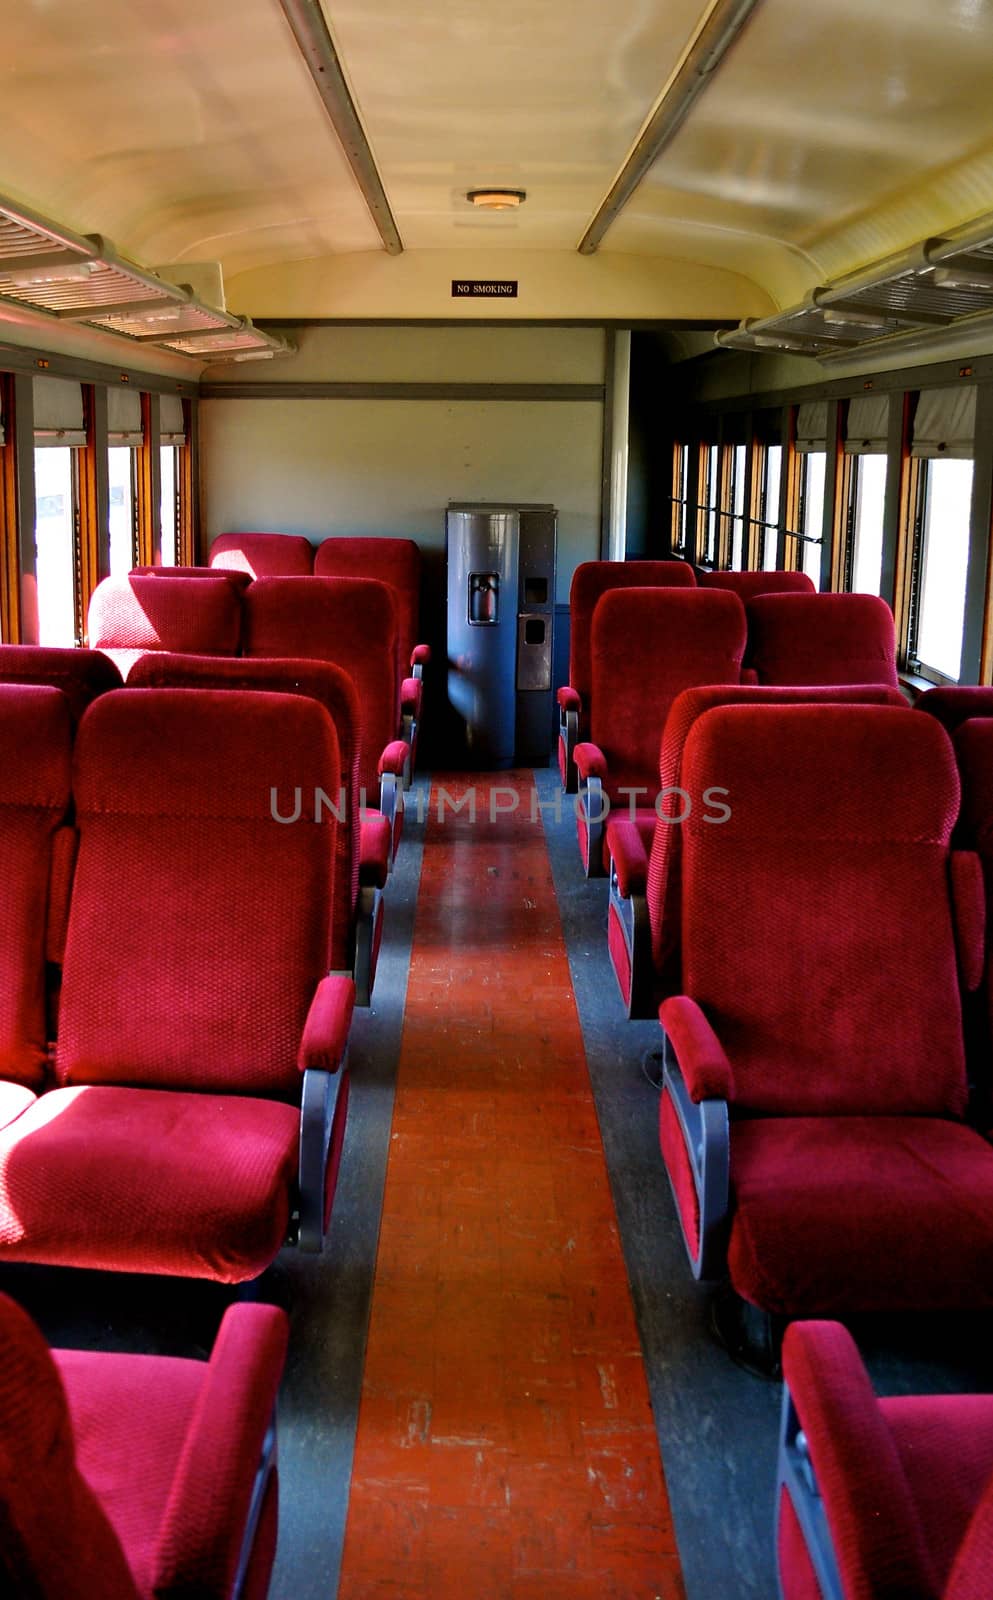 Inside Rail Car by RefocusPhoto